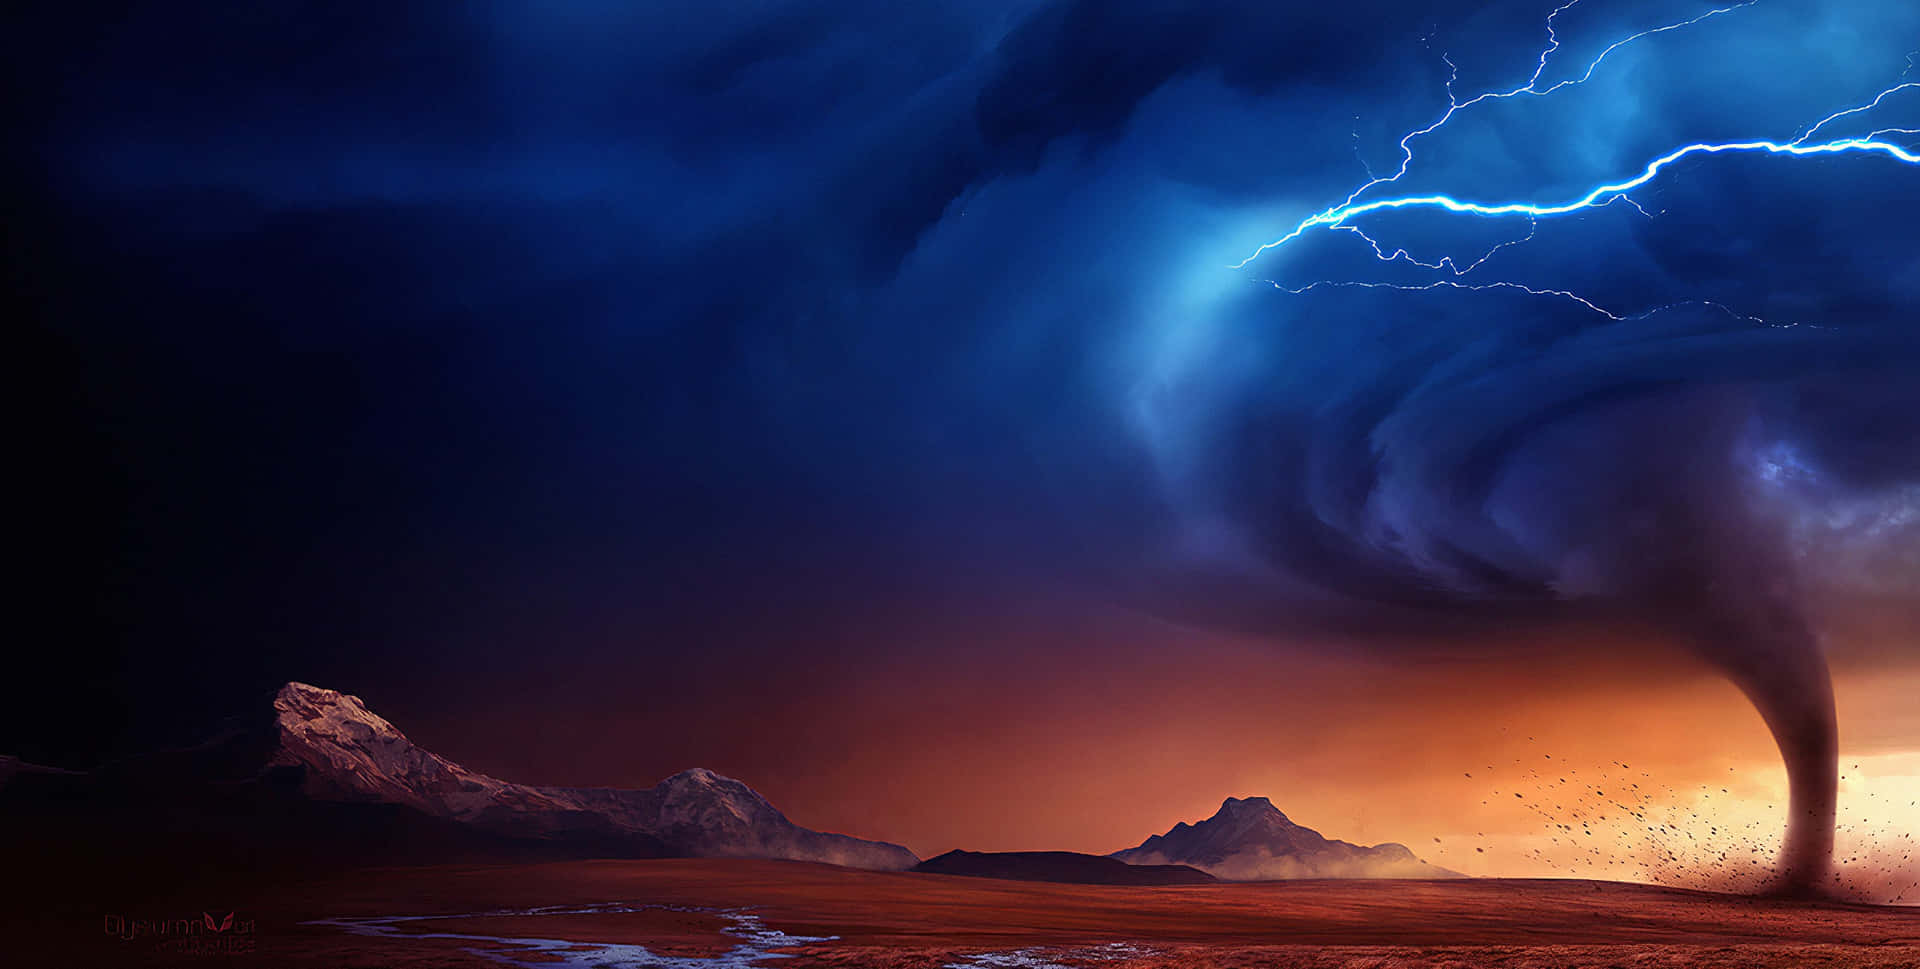 The Mighty Tornado - Nature's Furious Phenomenon